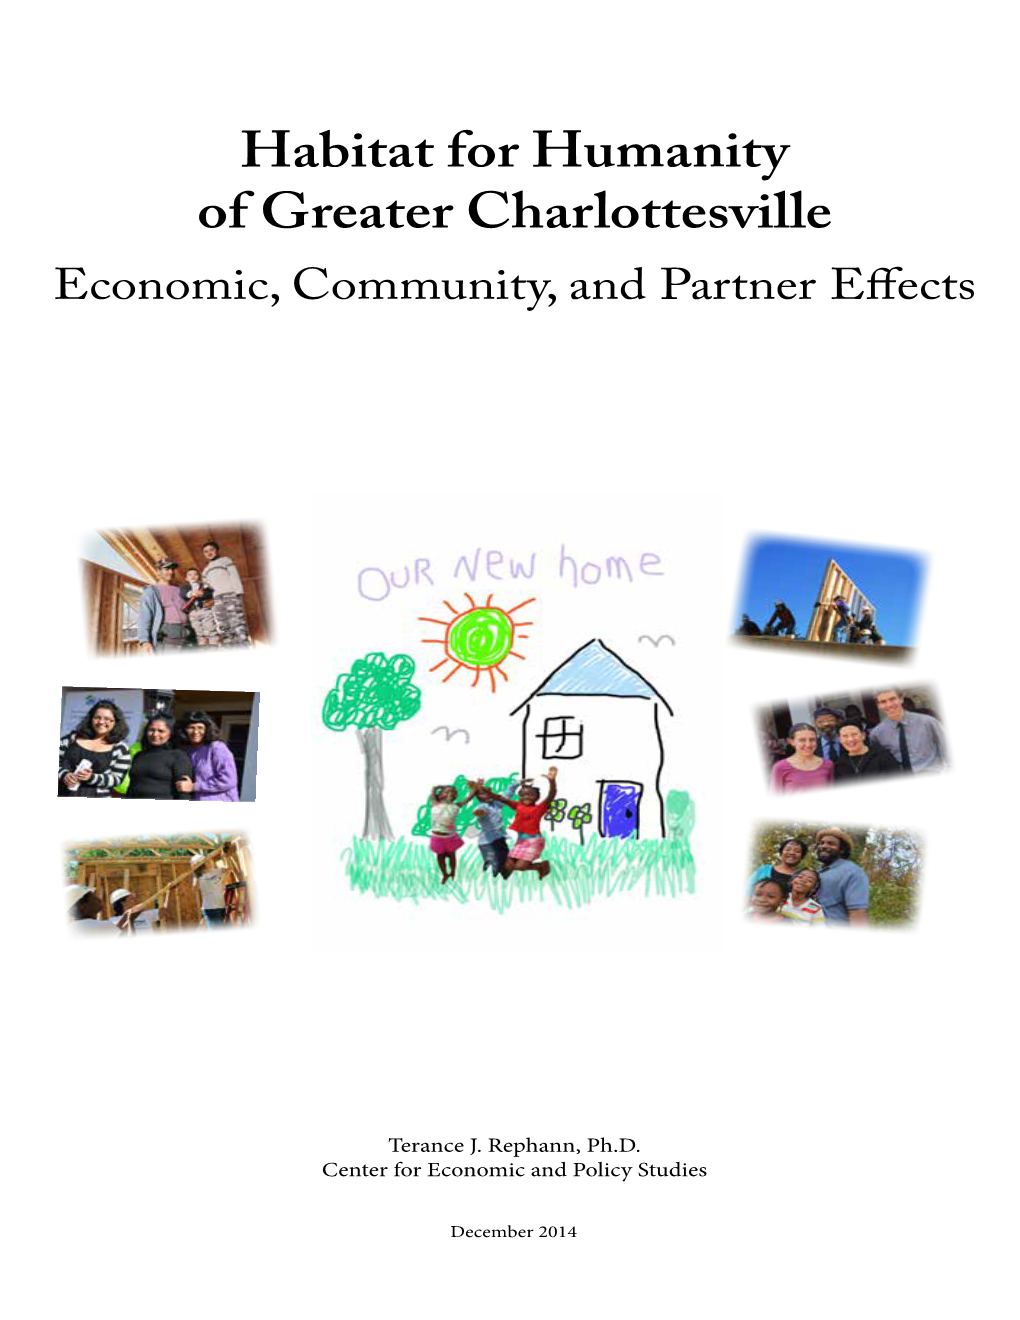 Economic, Community, and Partner Effects